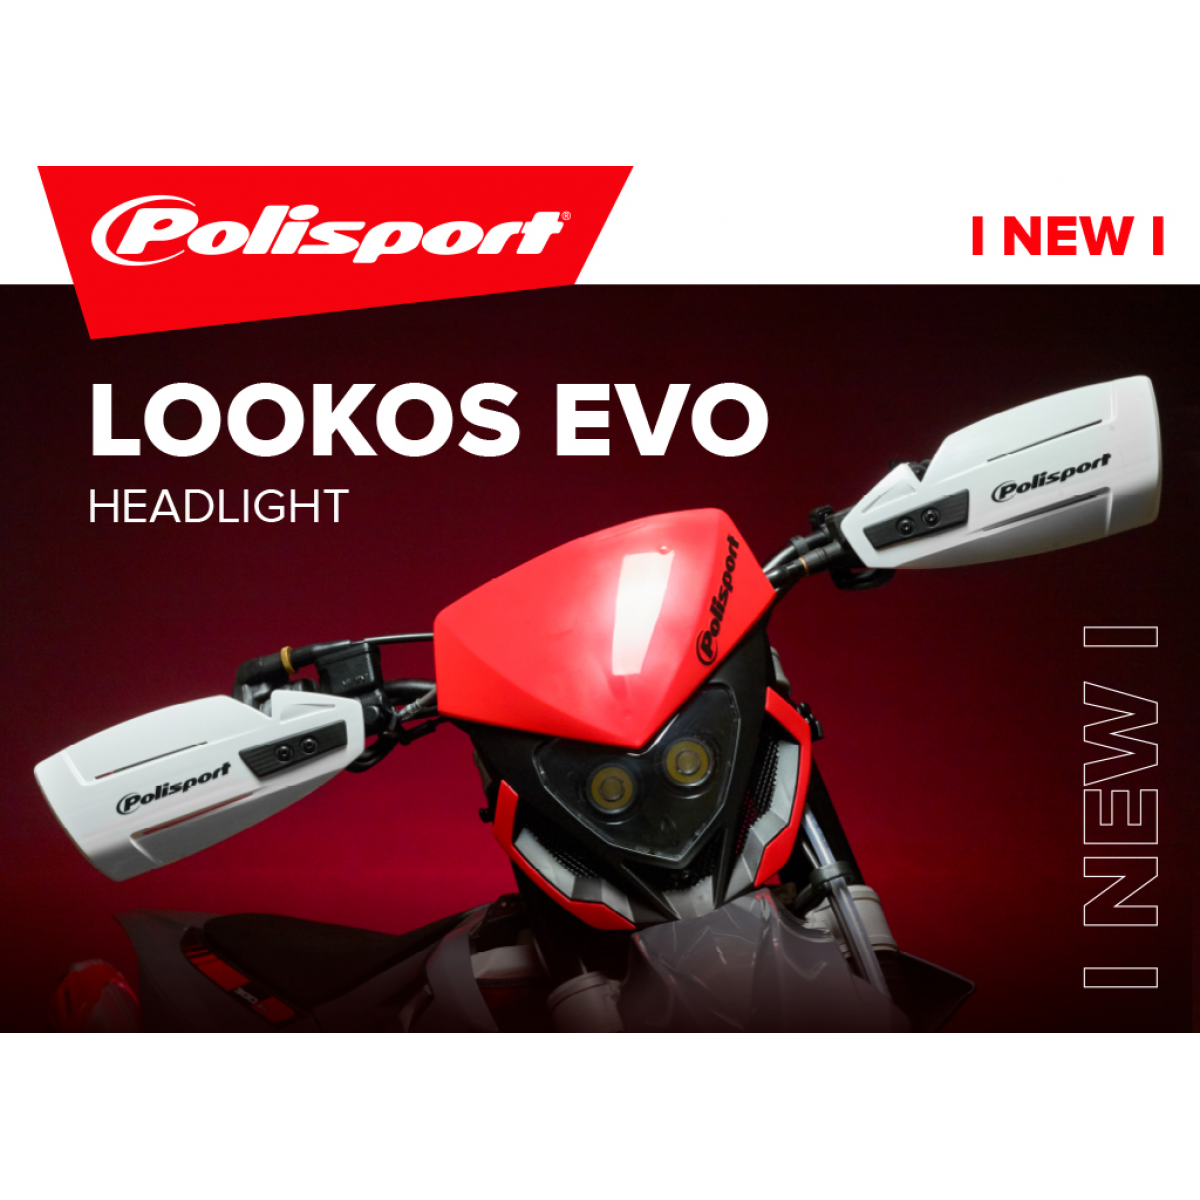 Lookos Evo - New Headlight from Polisport | Polisport